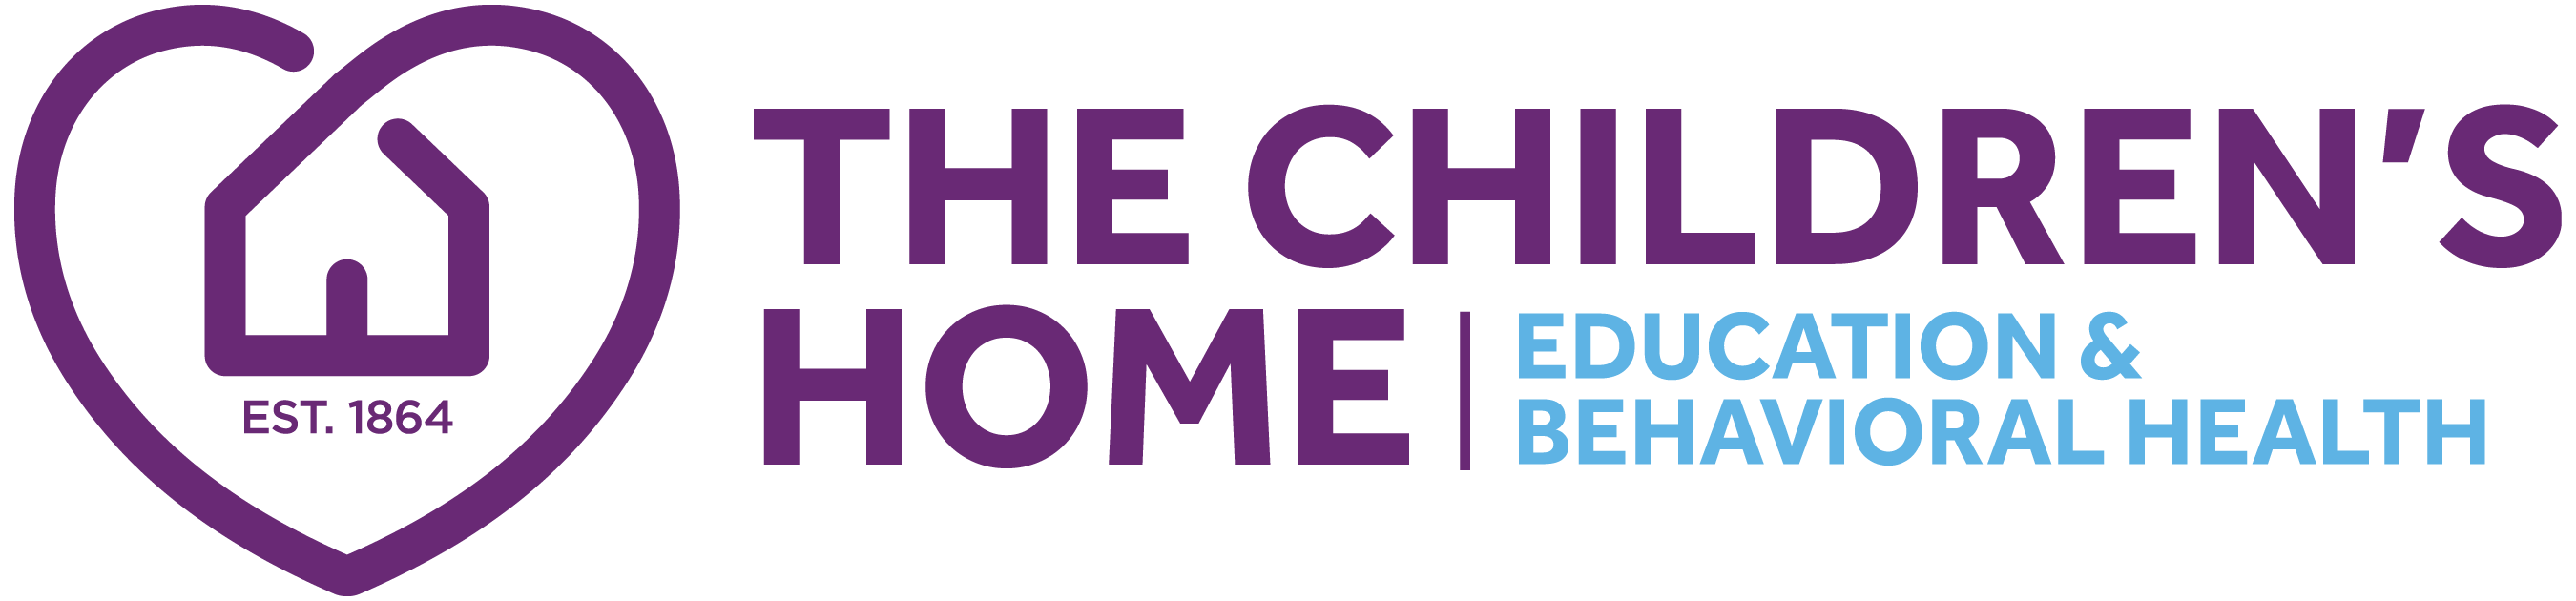 The Children's Home logo